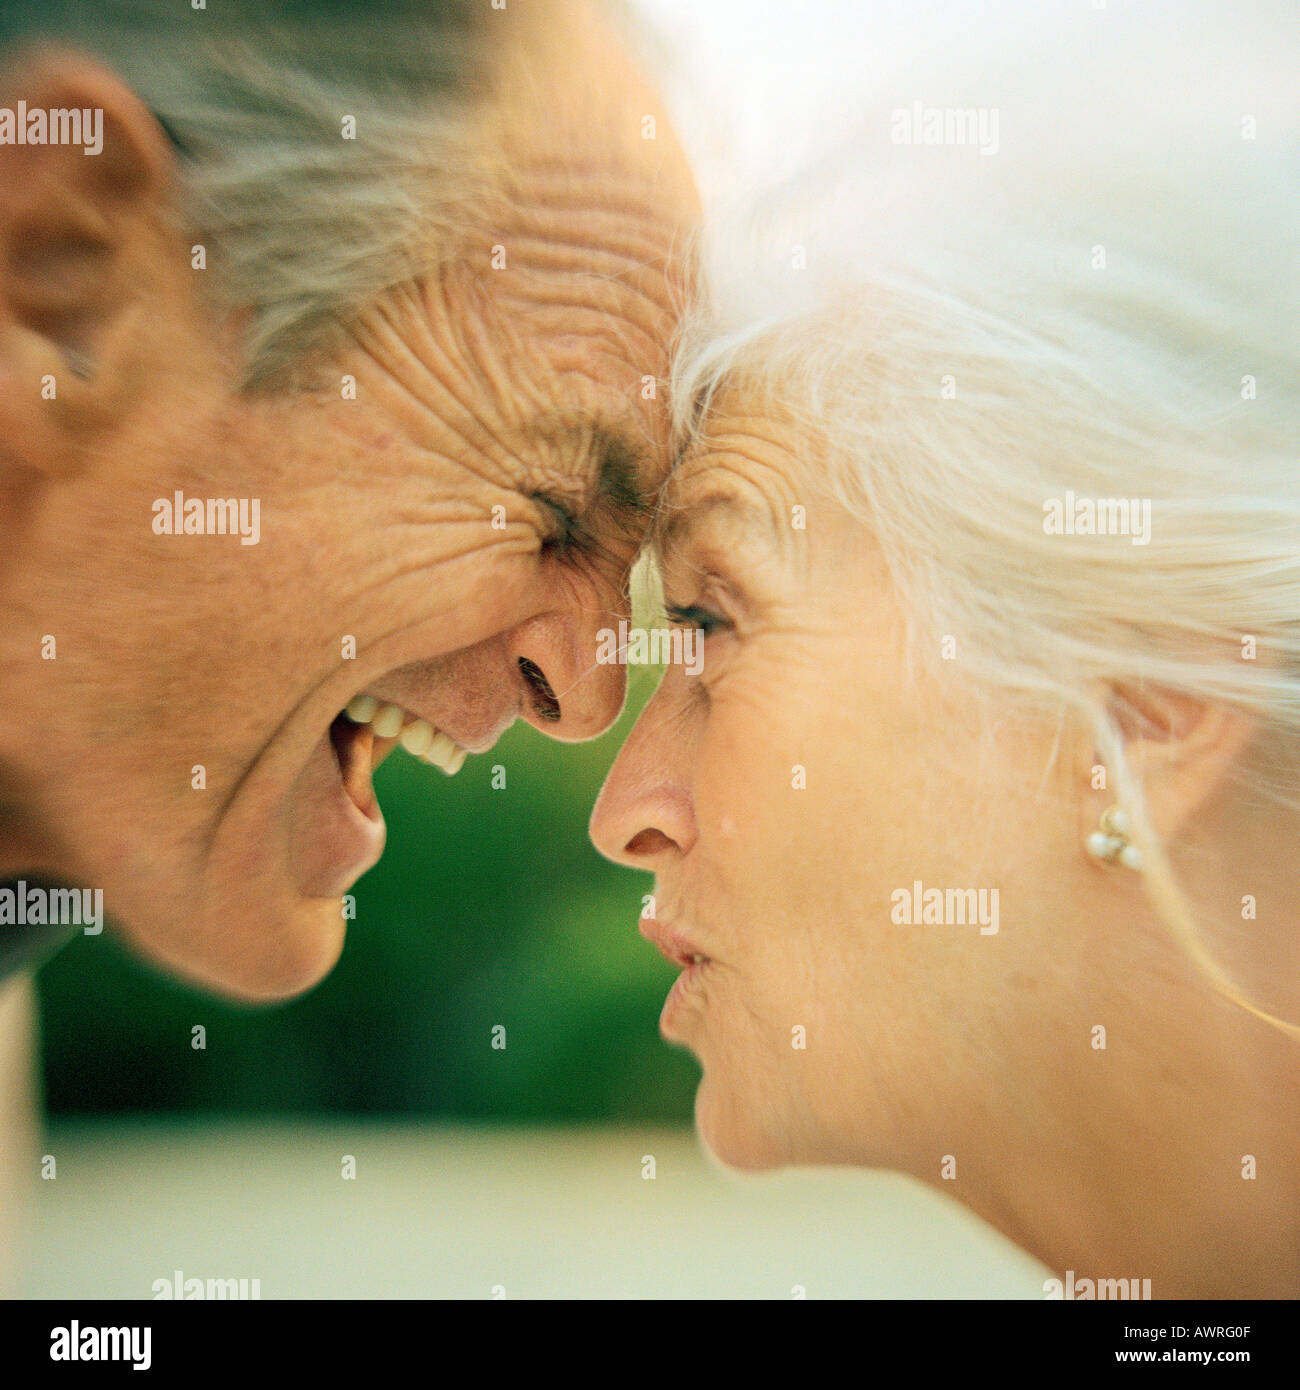 Senior couple arguing, foreheads touching, close-up Stock Photo